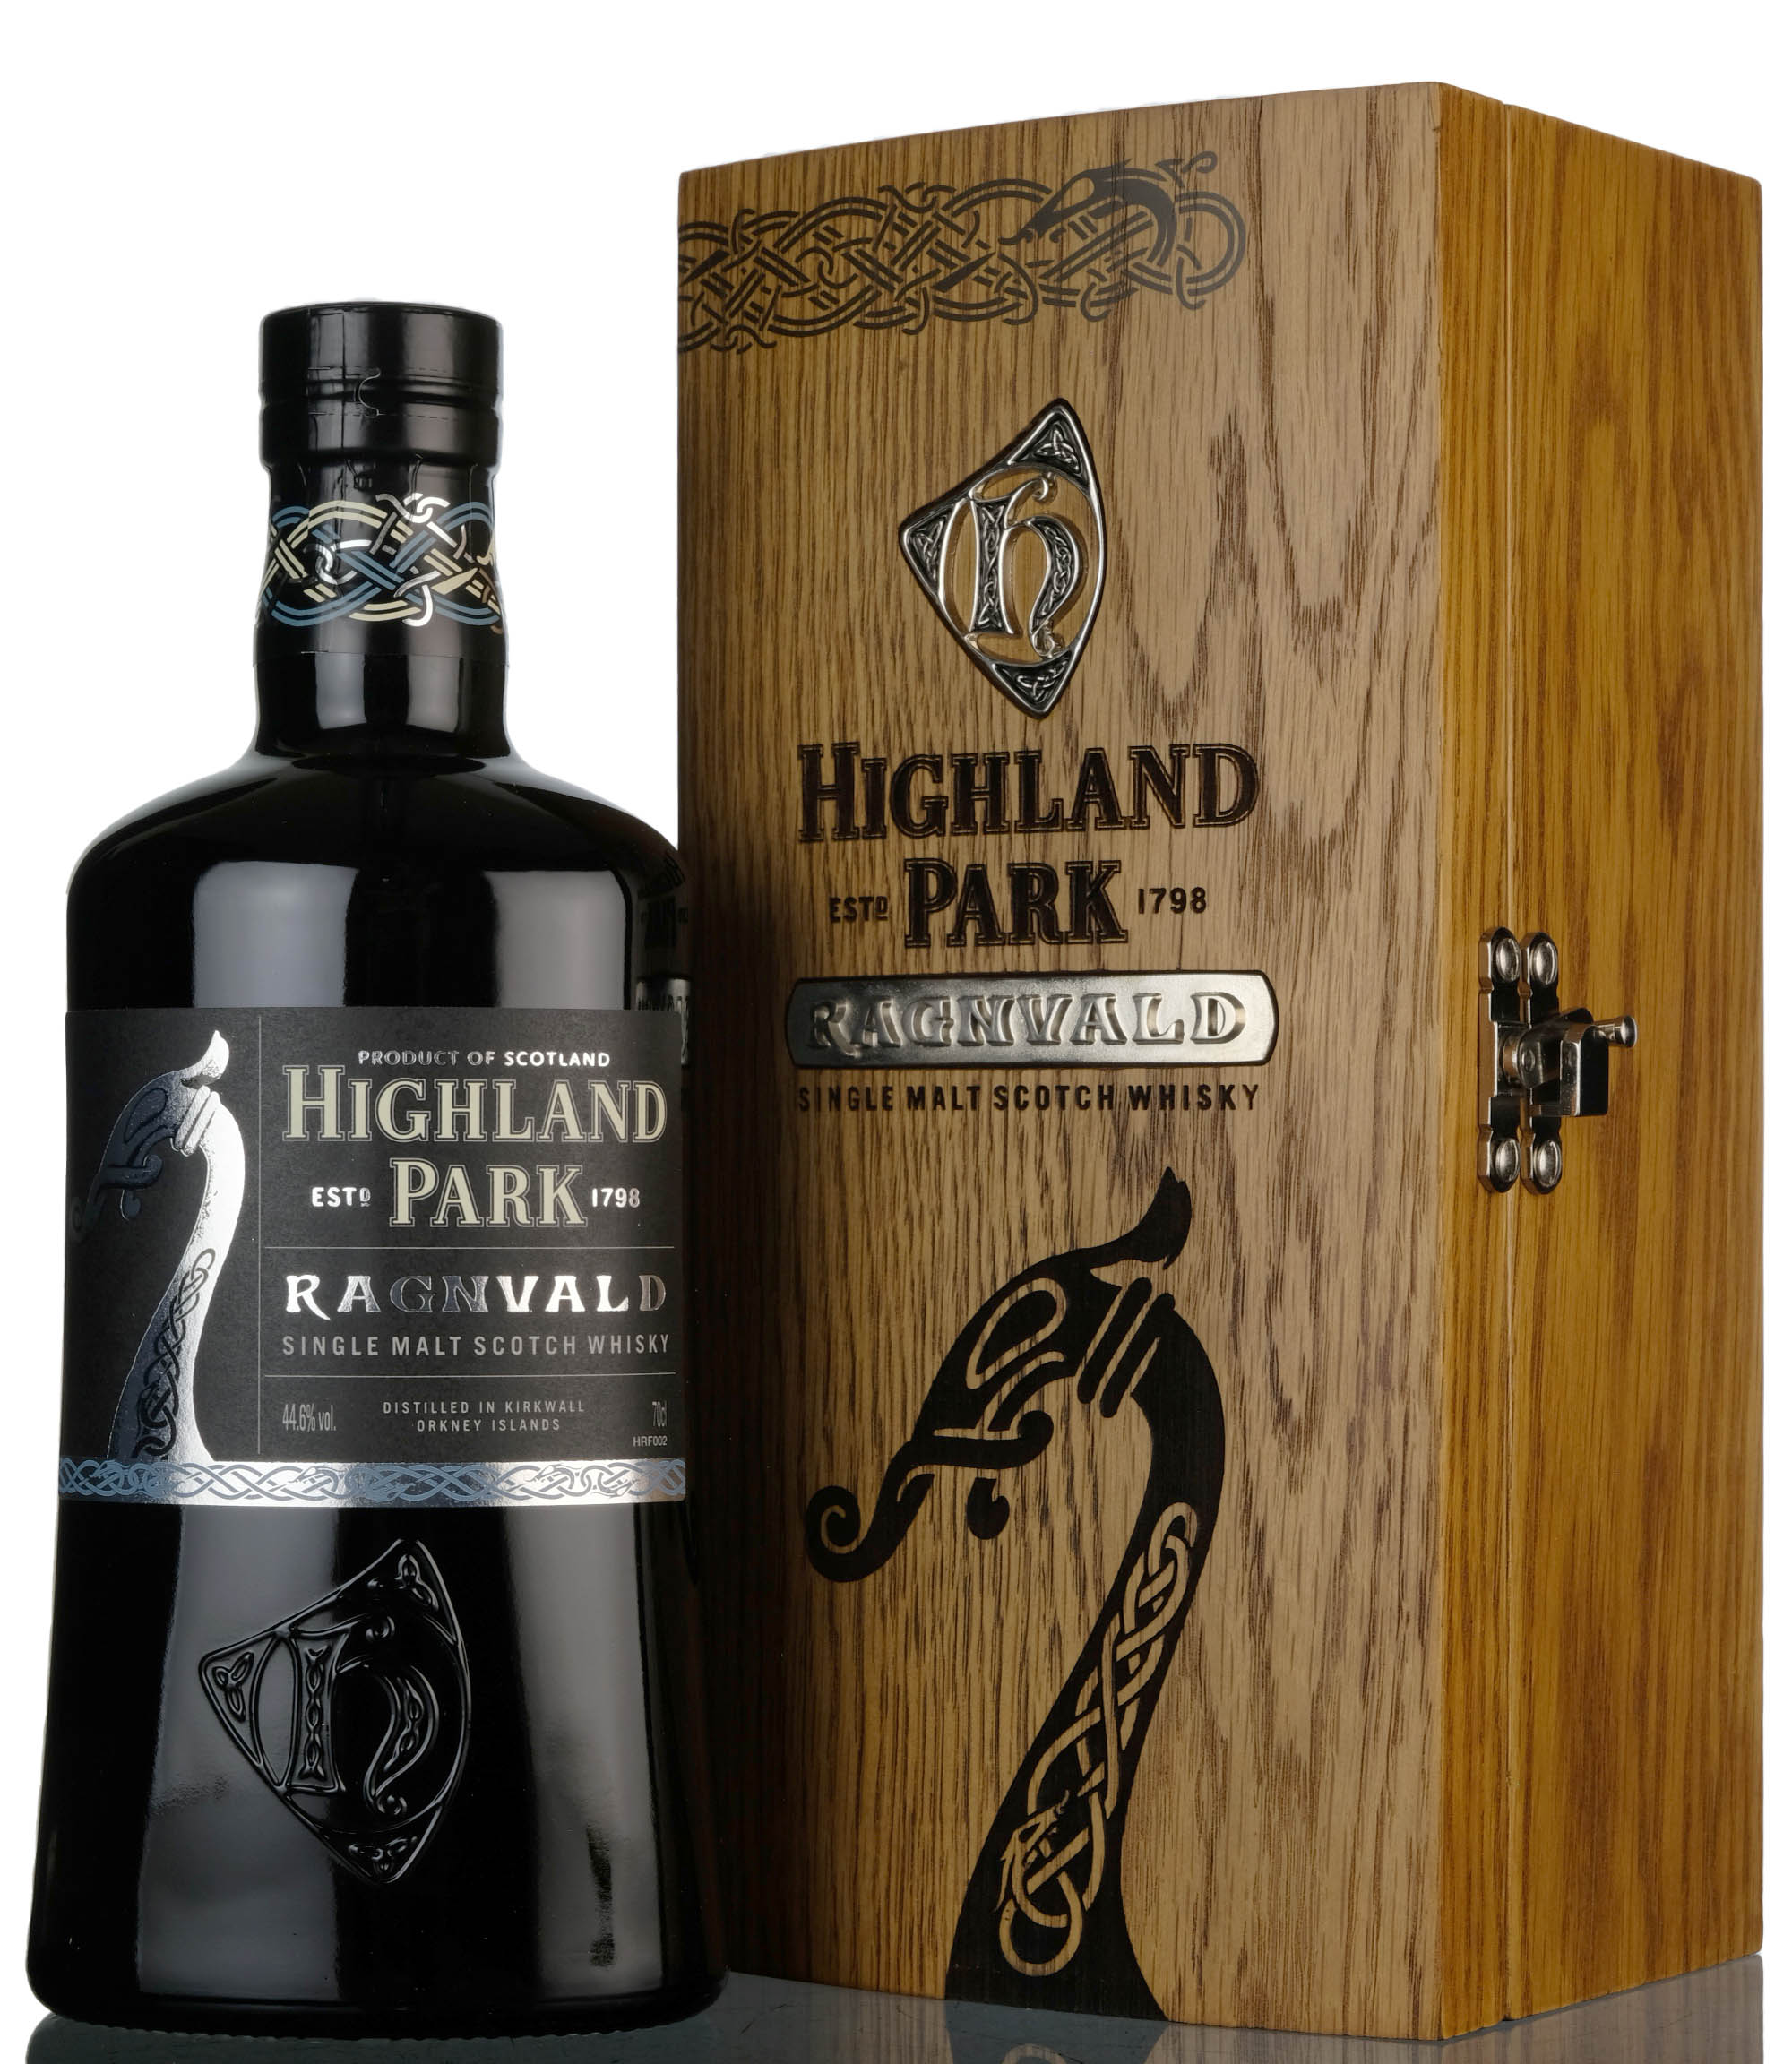 Highland Park The Warrior Series Ragnvald - 2013 Release